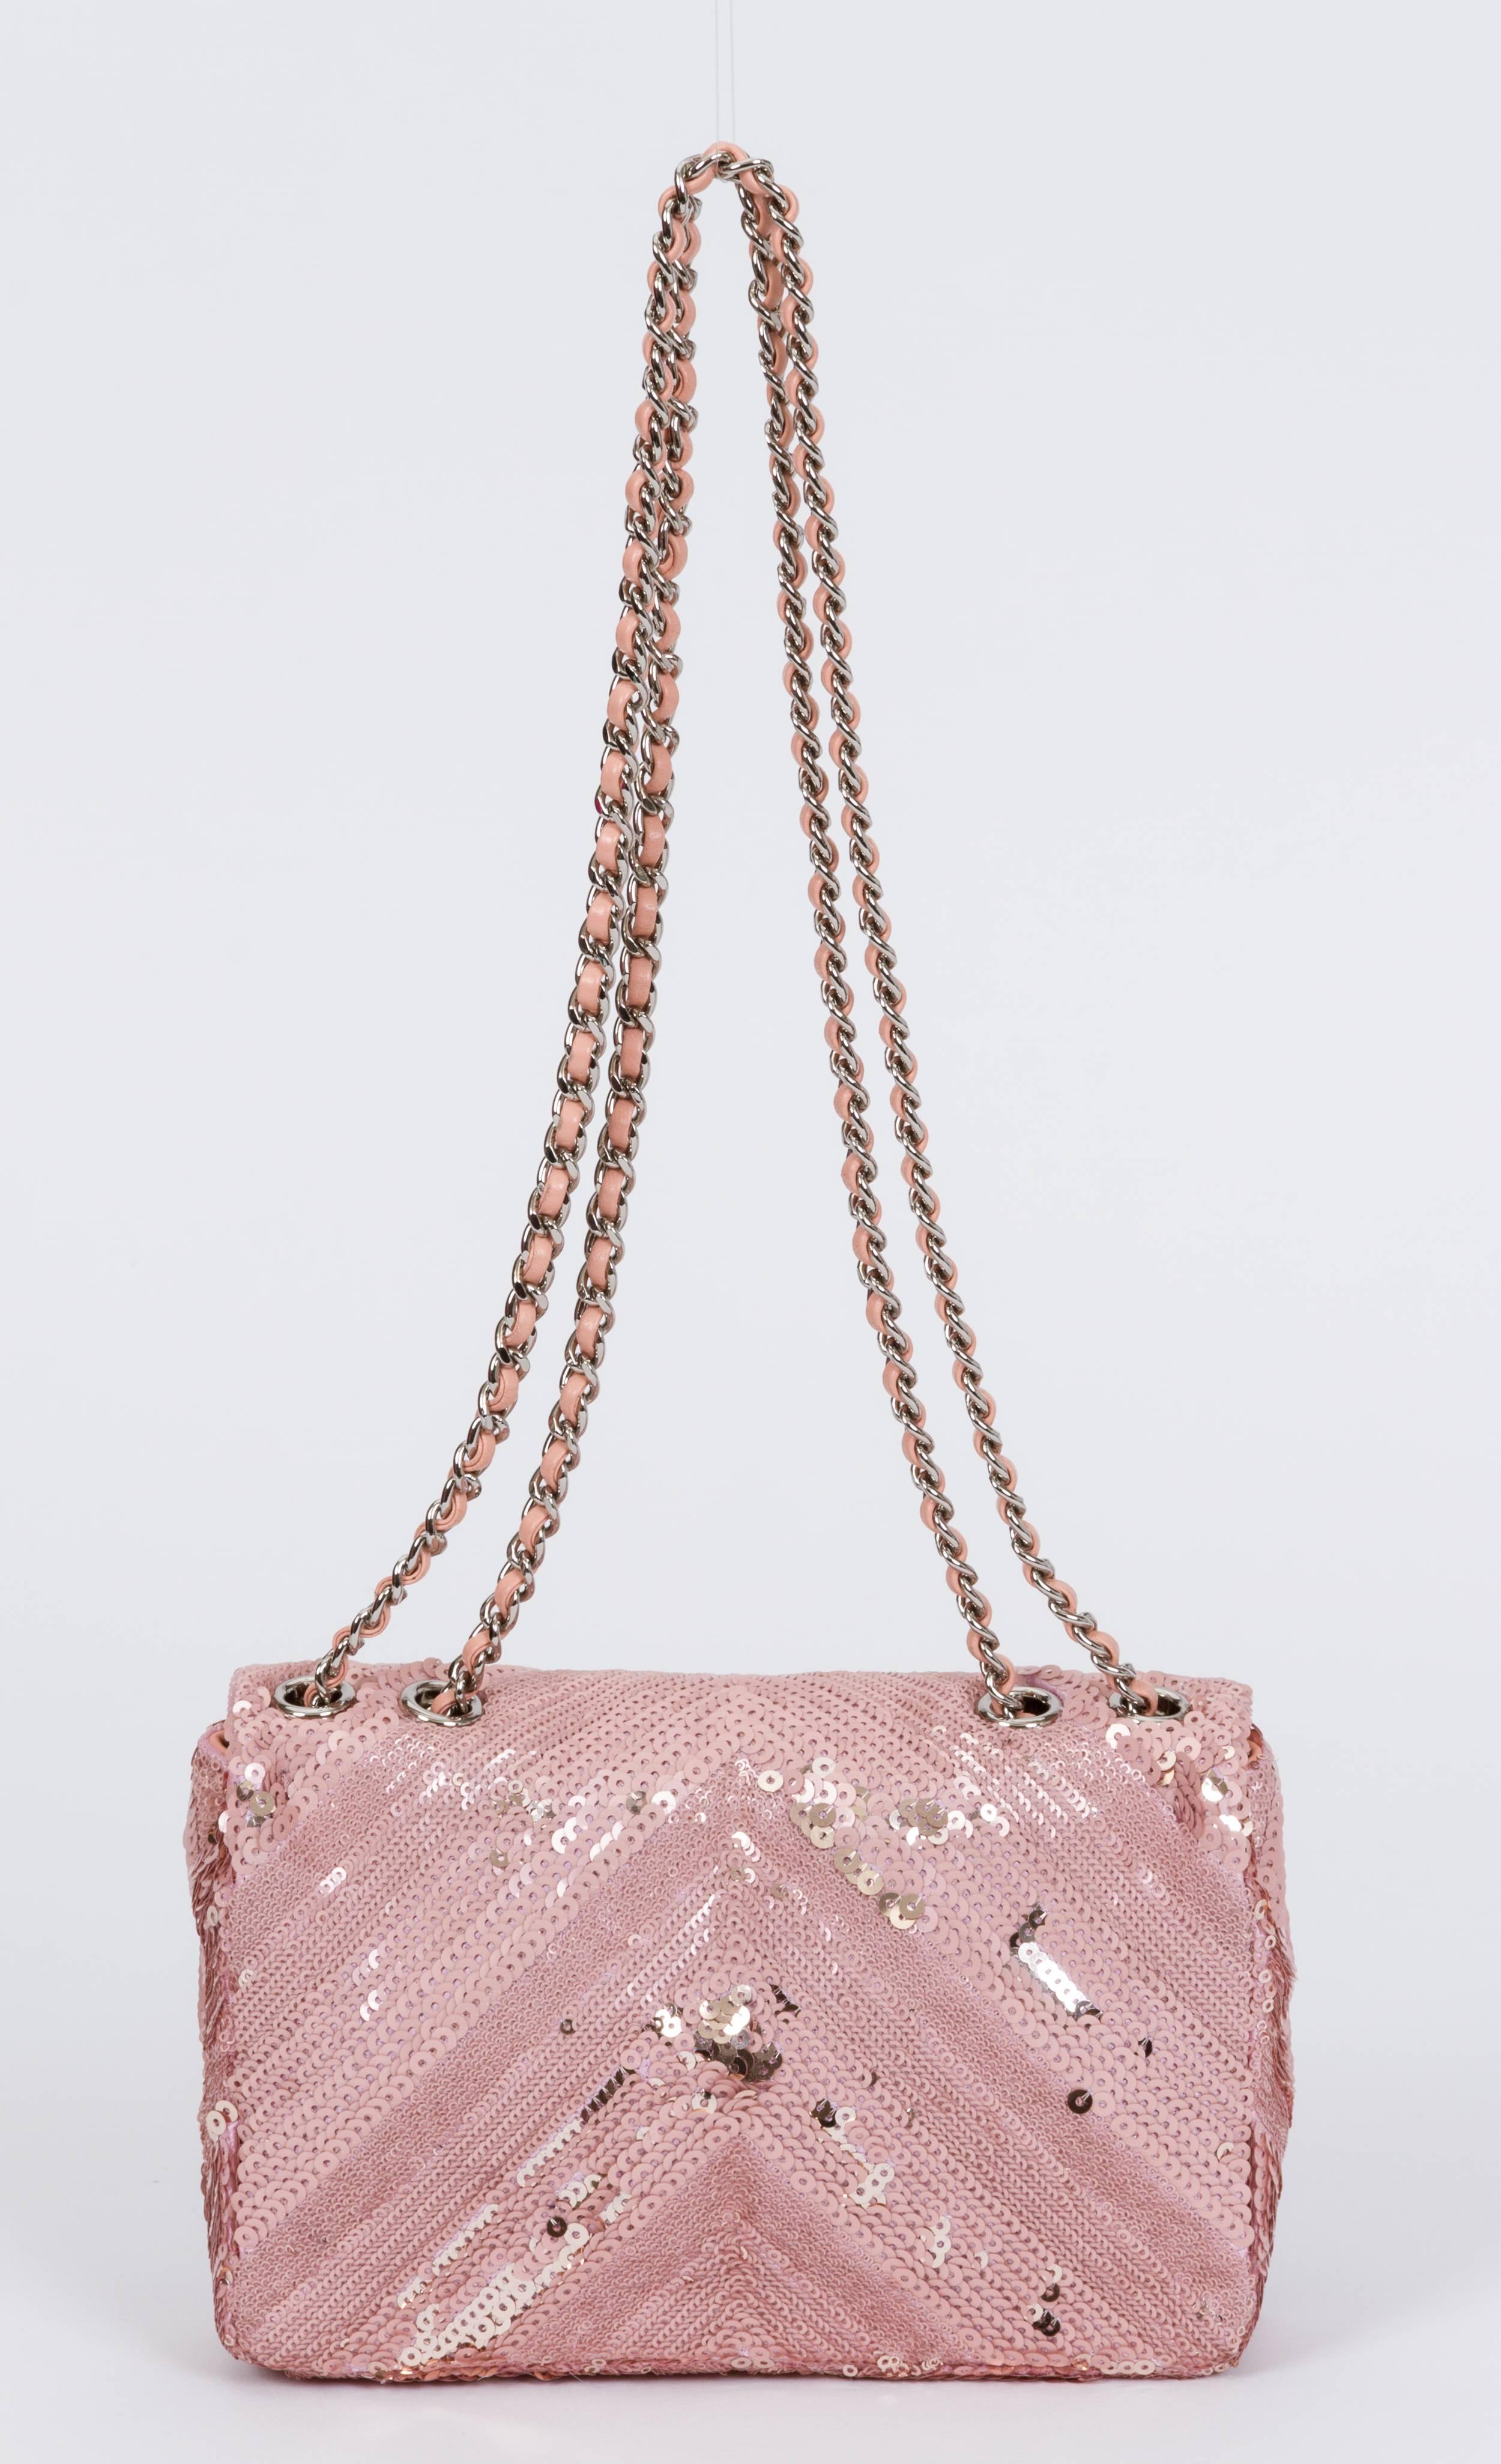 chanel pink sequin bag